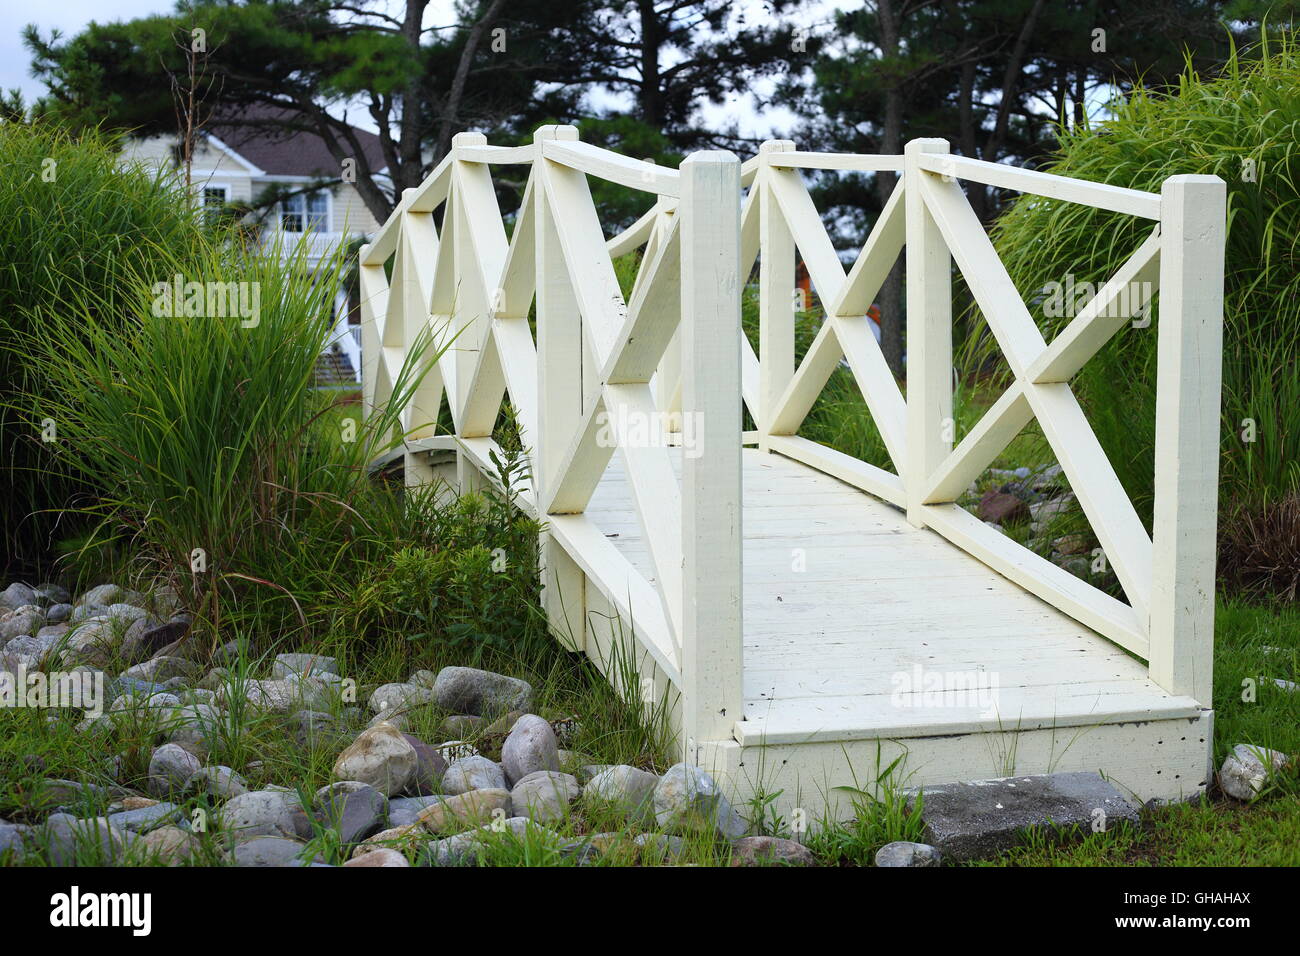 Yellow wooden footbridge in a green park Stock Photo